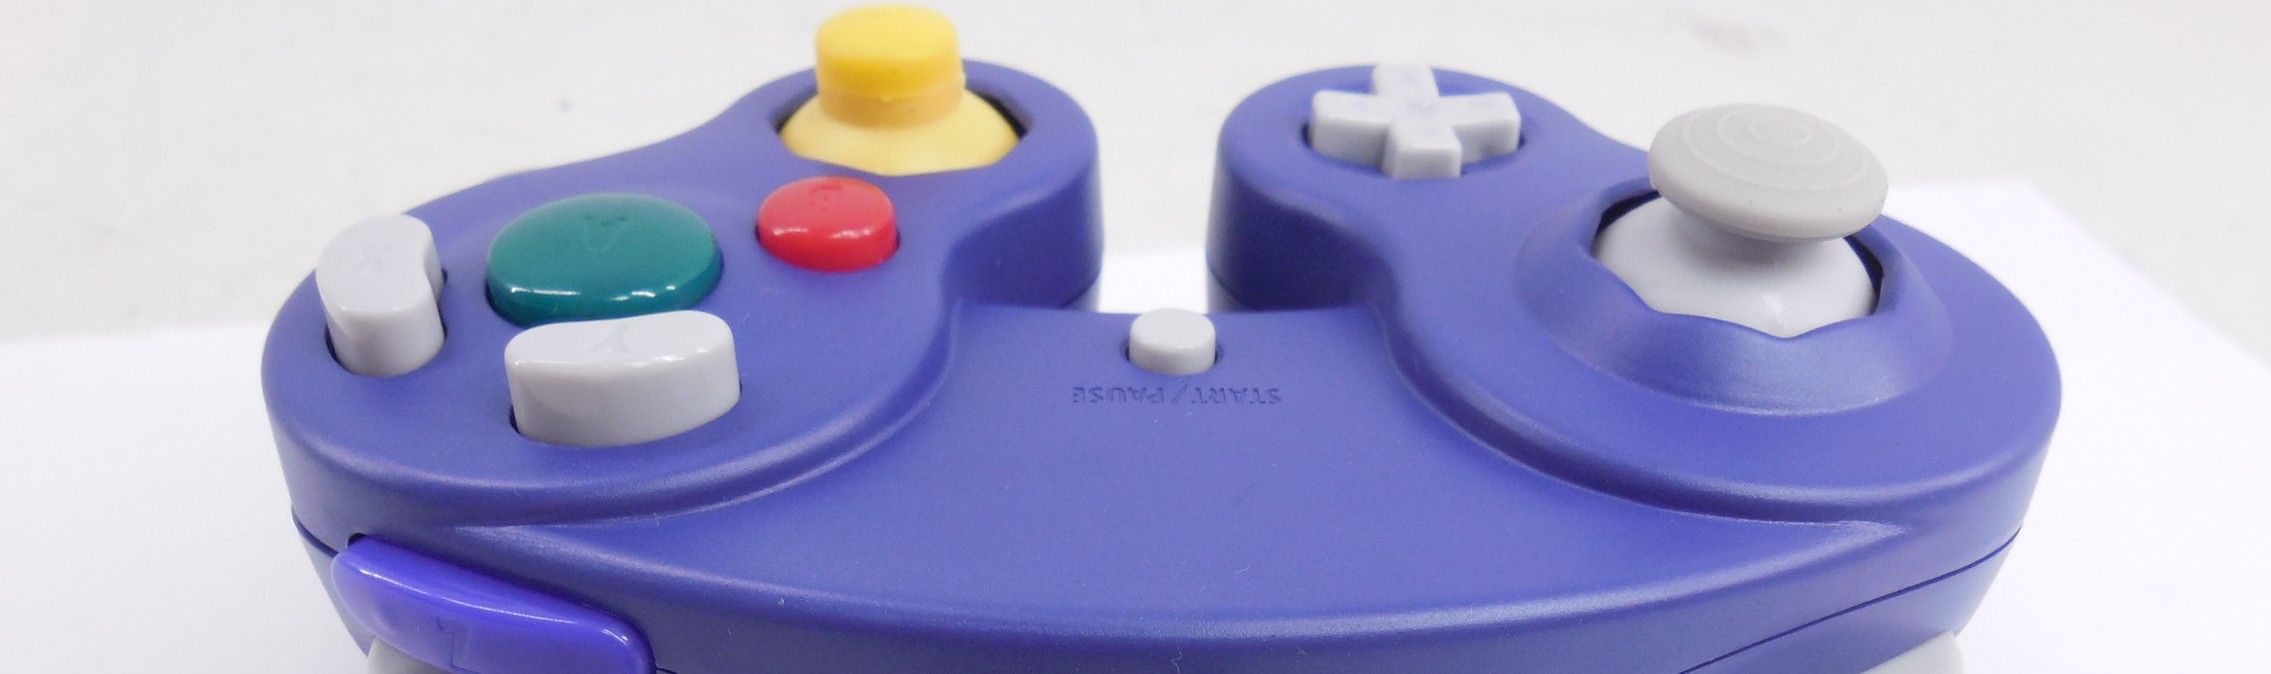 Nintendo Gamecube controller - crop